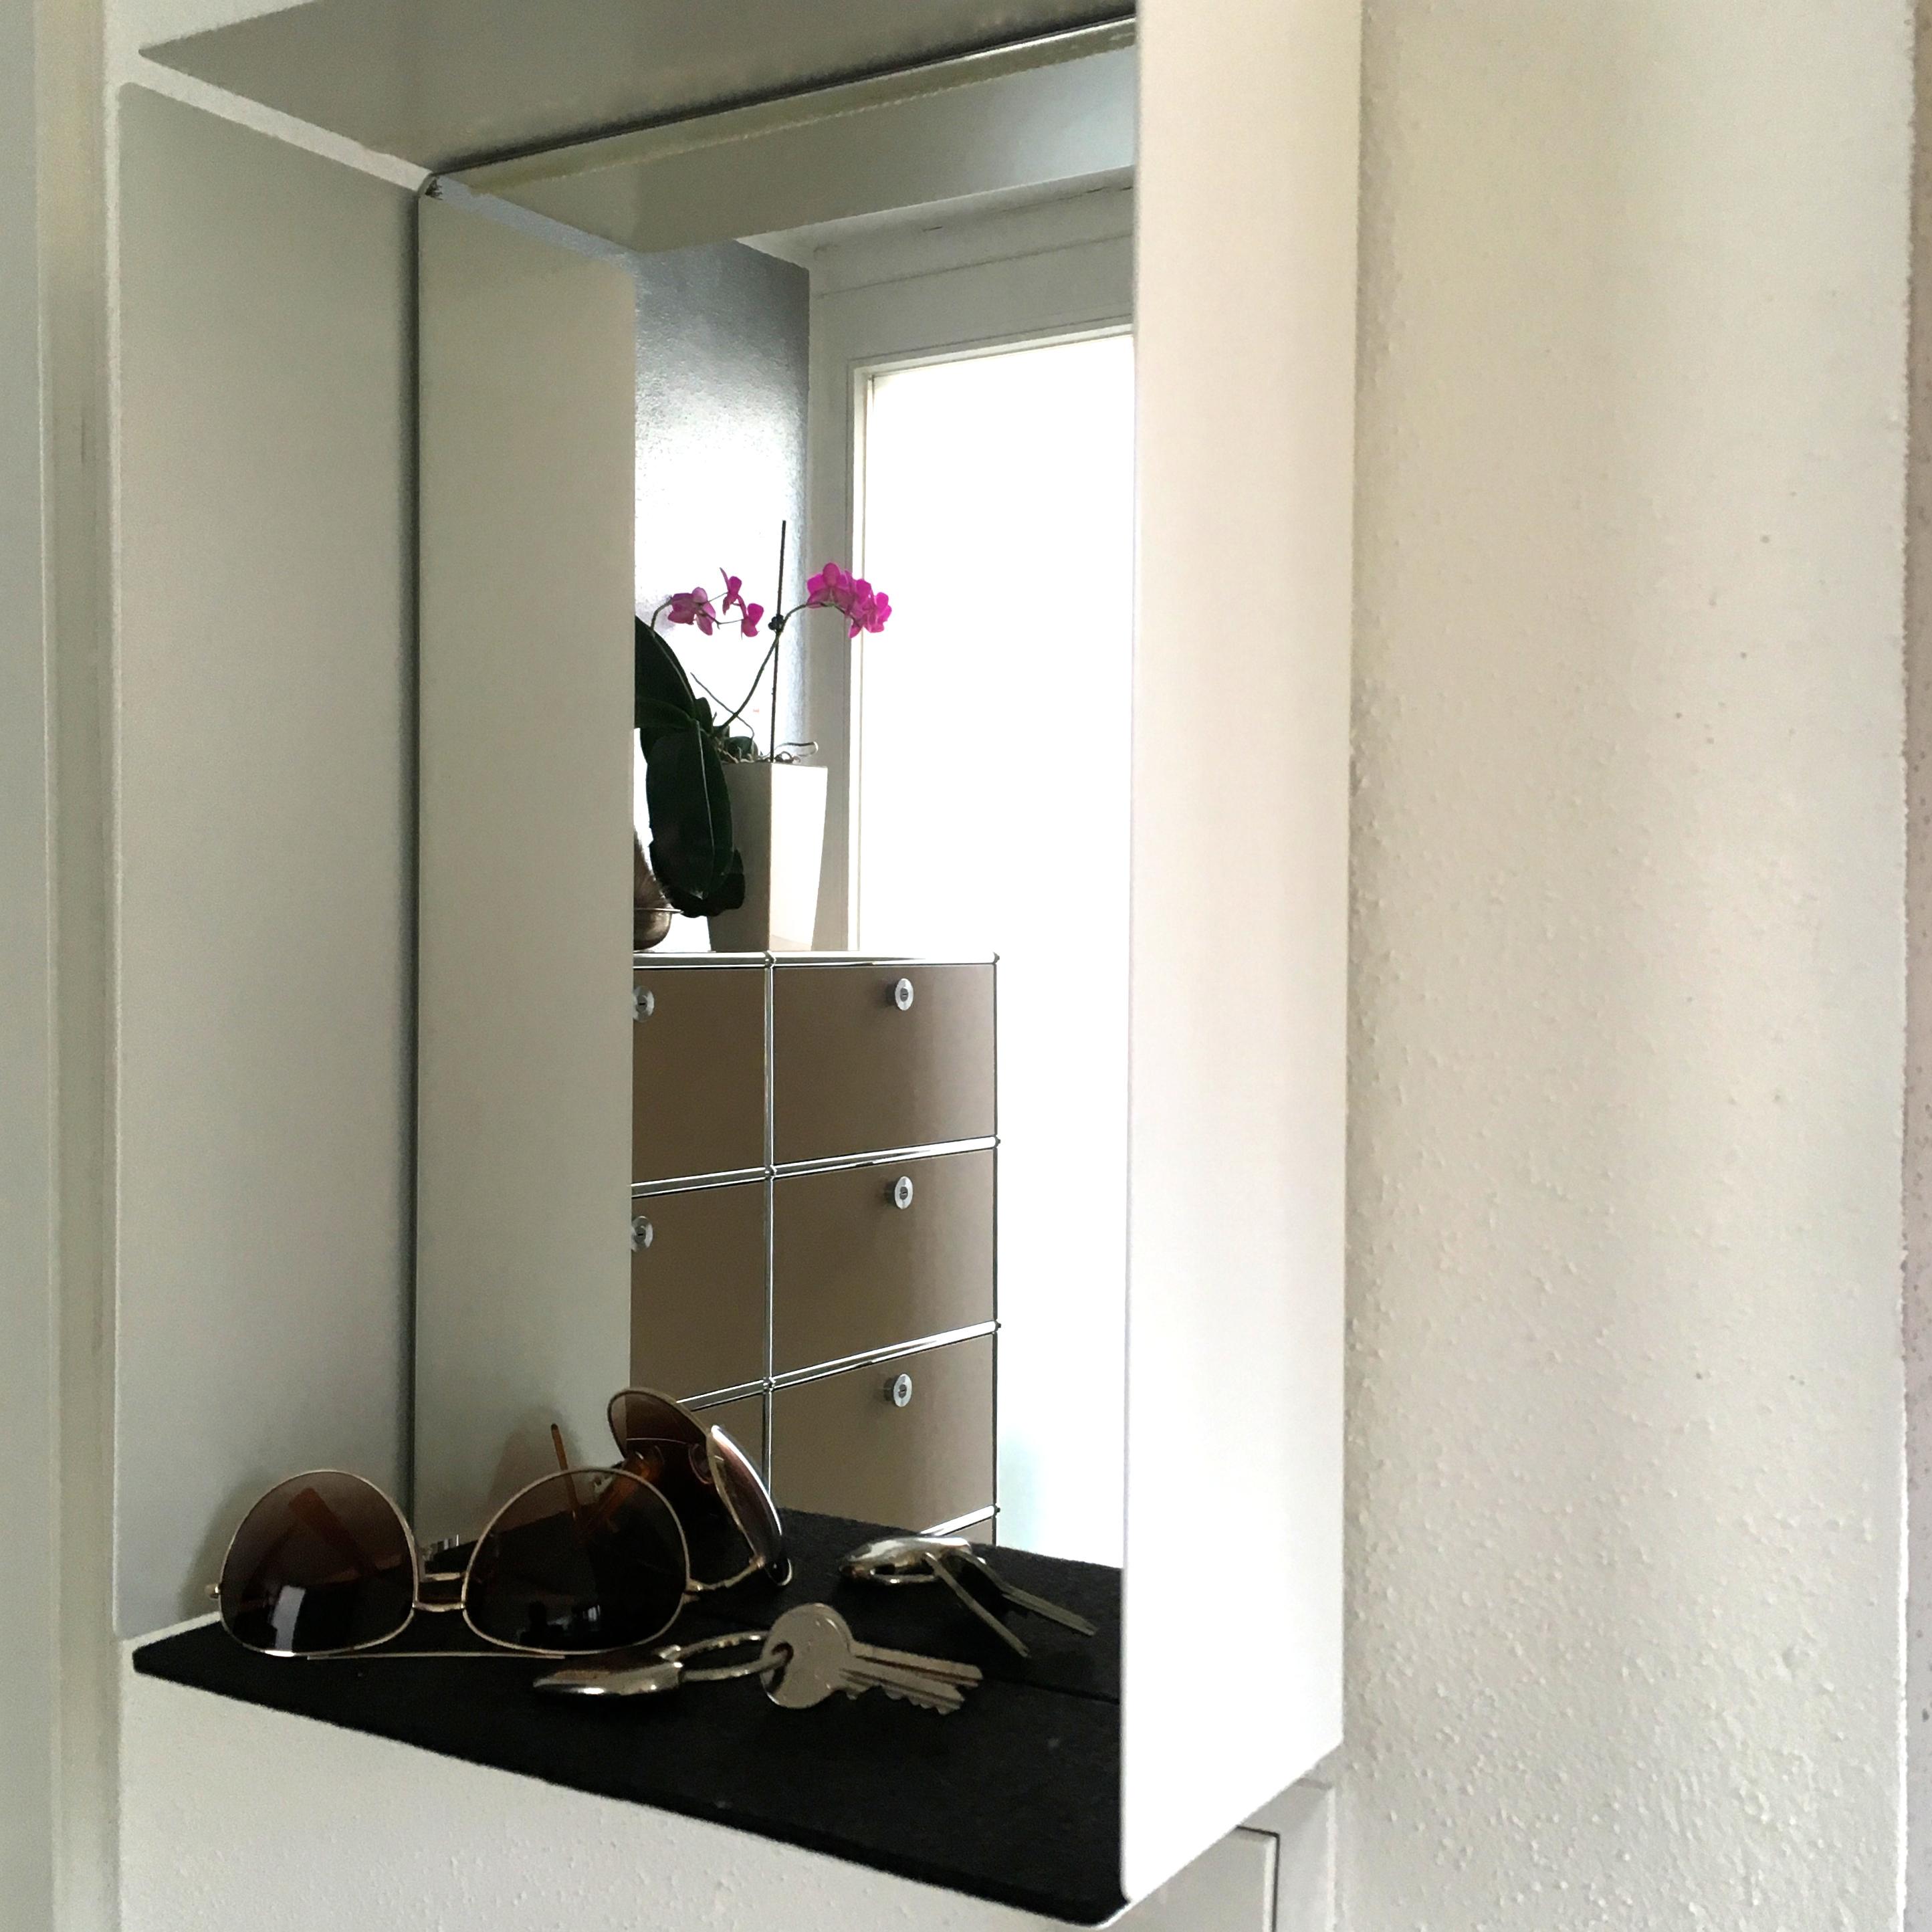 Spiegelung #spiegel #kommode #sideboard #eingang #usmhaller ©ALL ABOUT DESIGN by Christina Harmsen